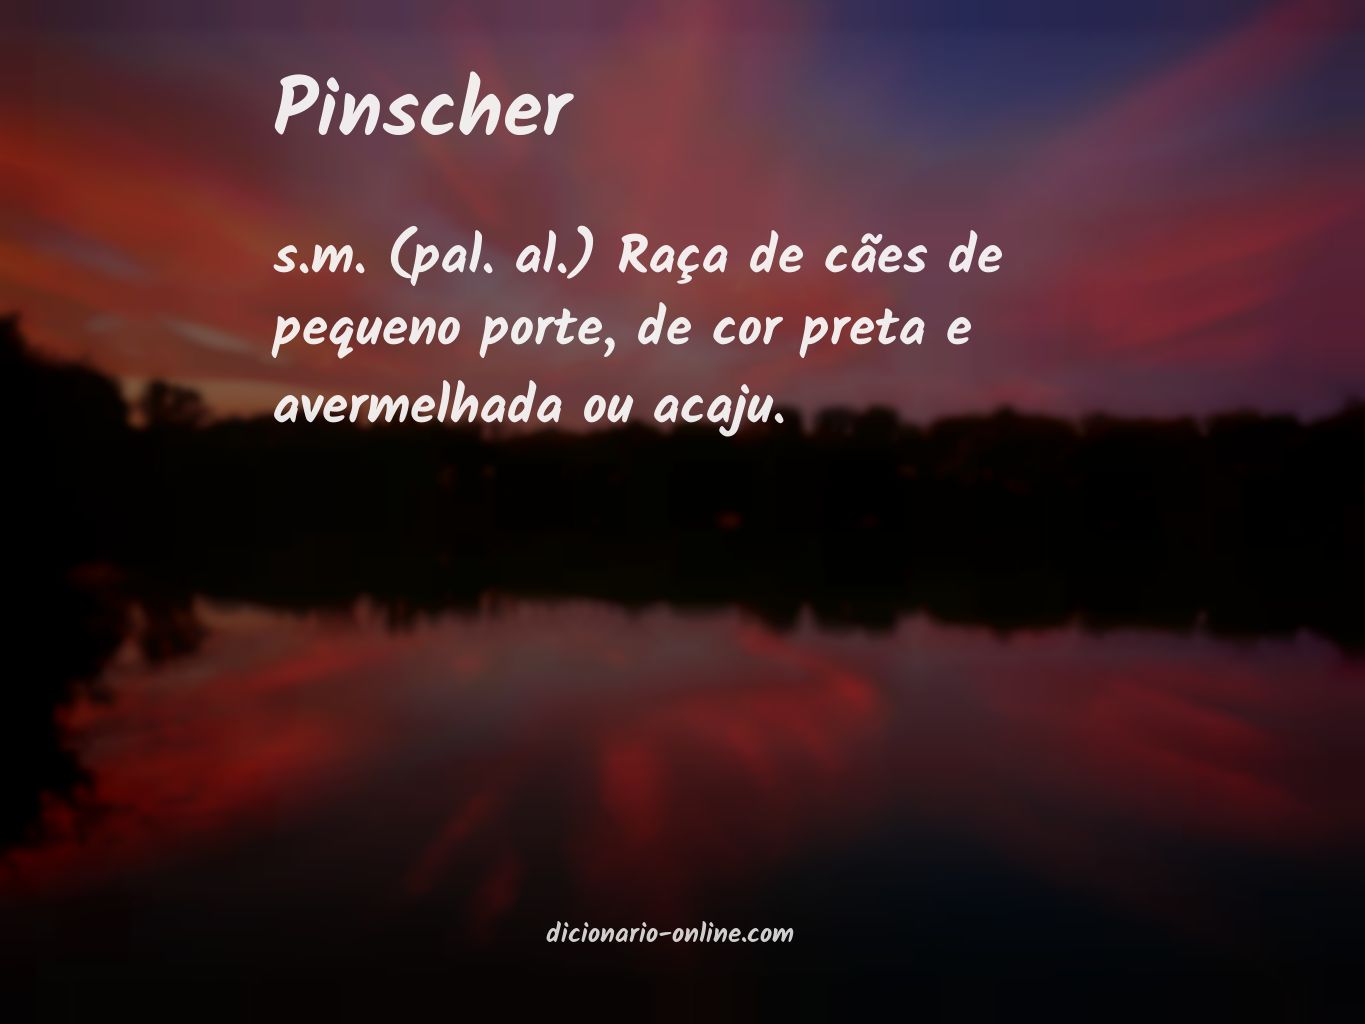 Significado de pinscher